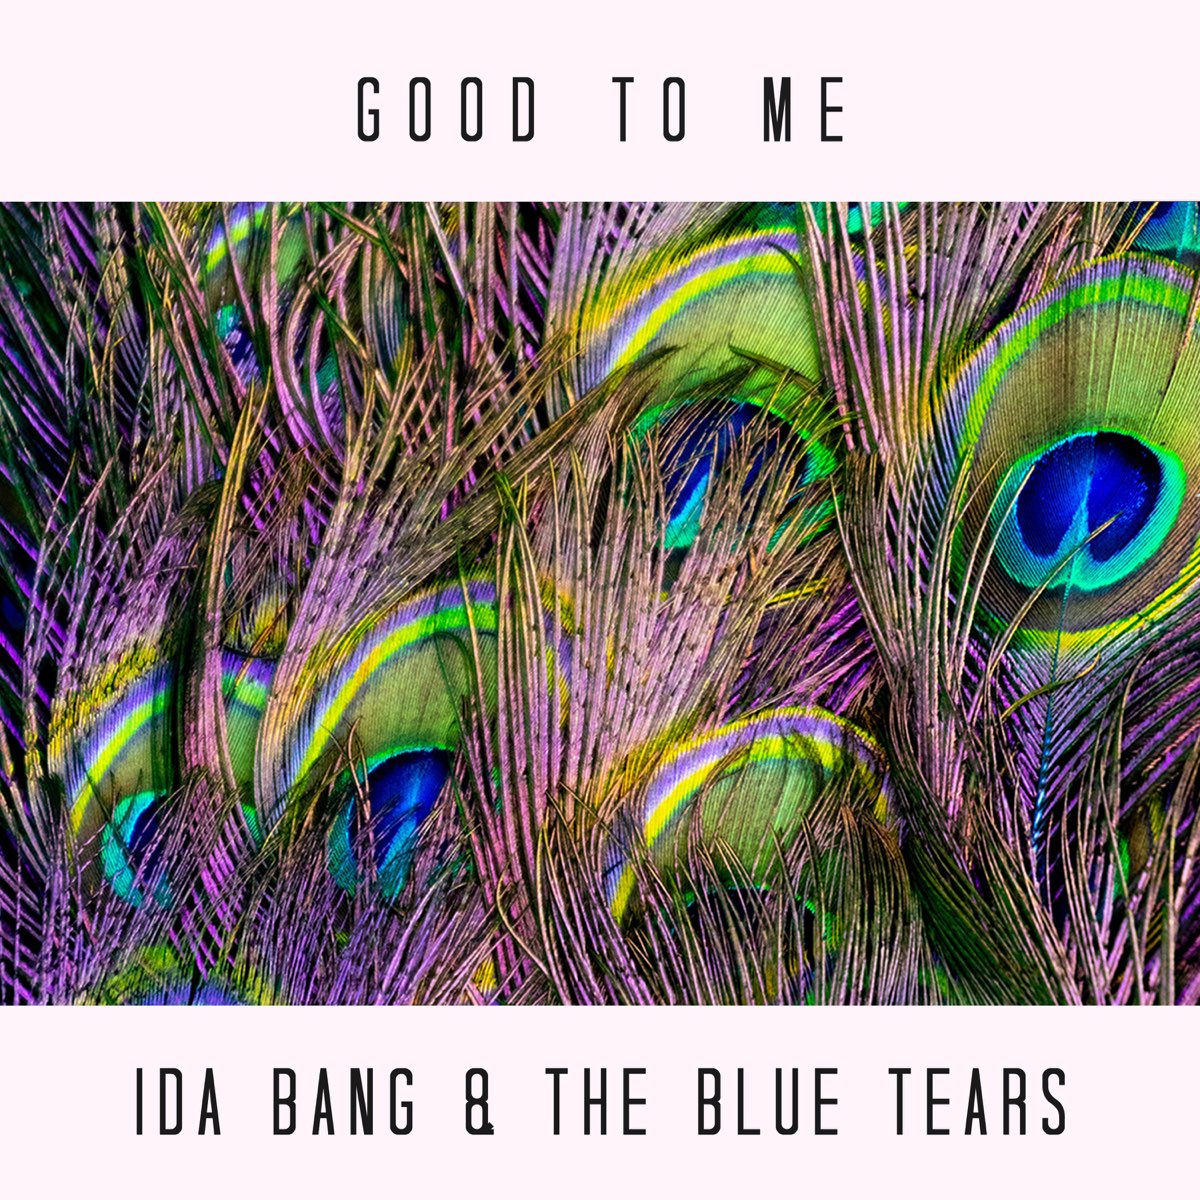 Blue tears. Blue tears - 1990 - Blue tears. Tears - the best of. Orange n Blue – tears all over you.